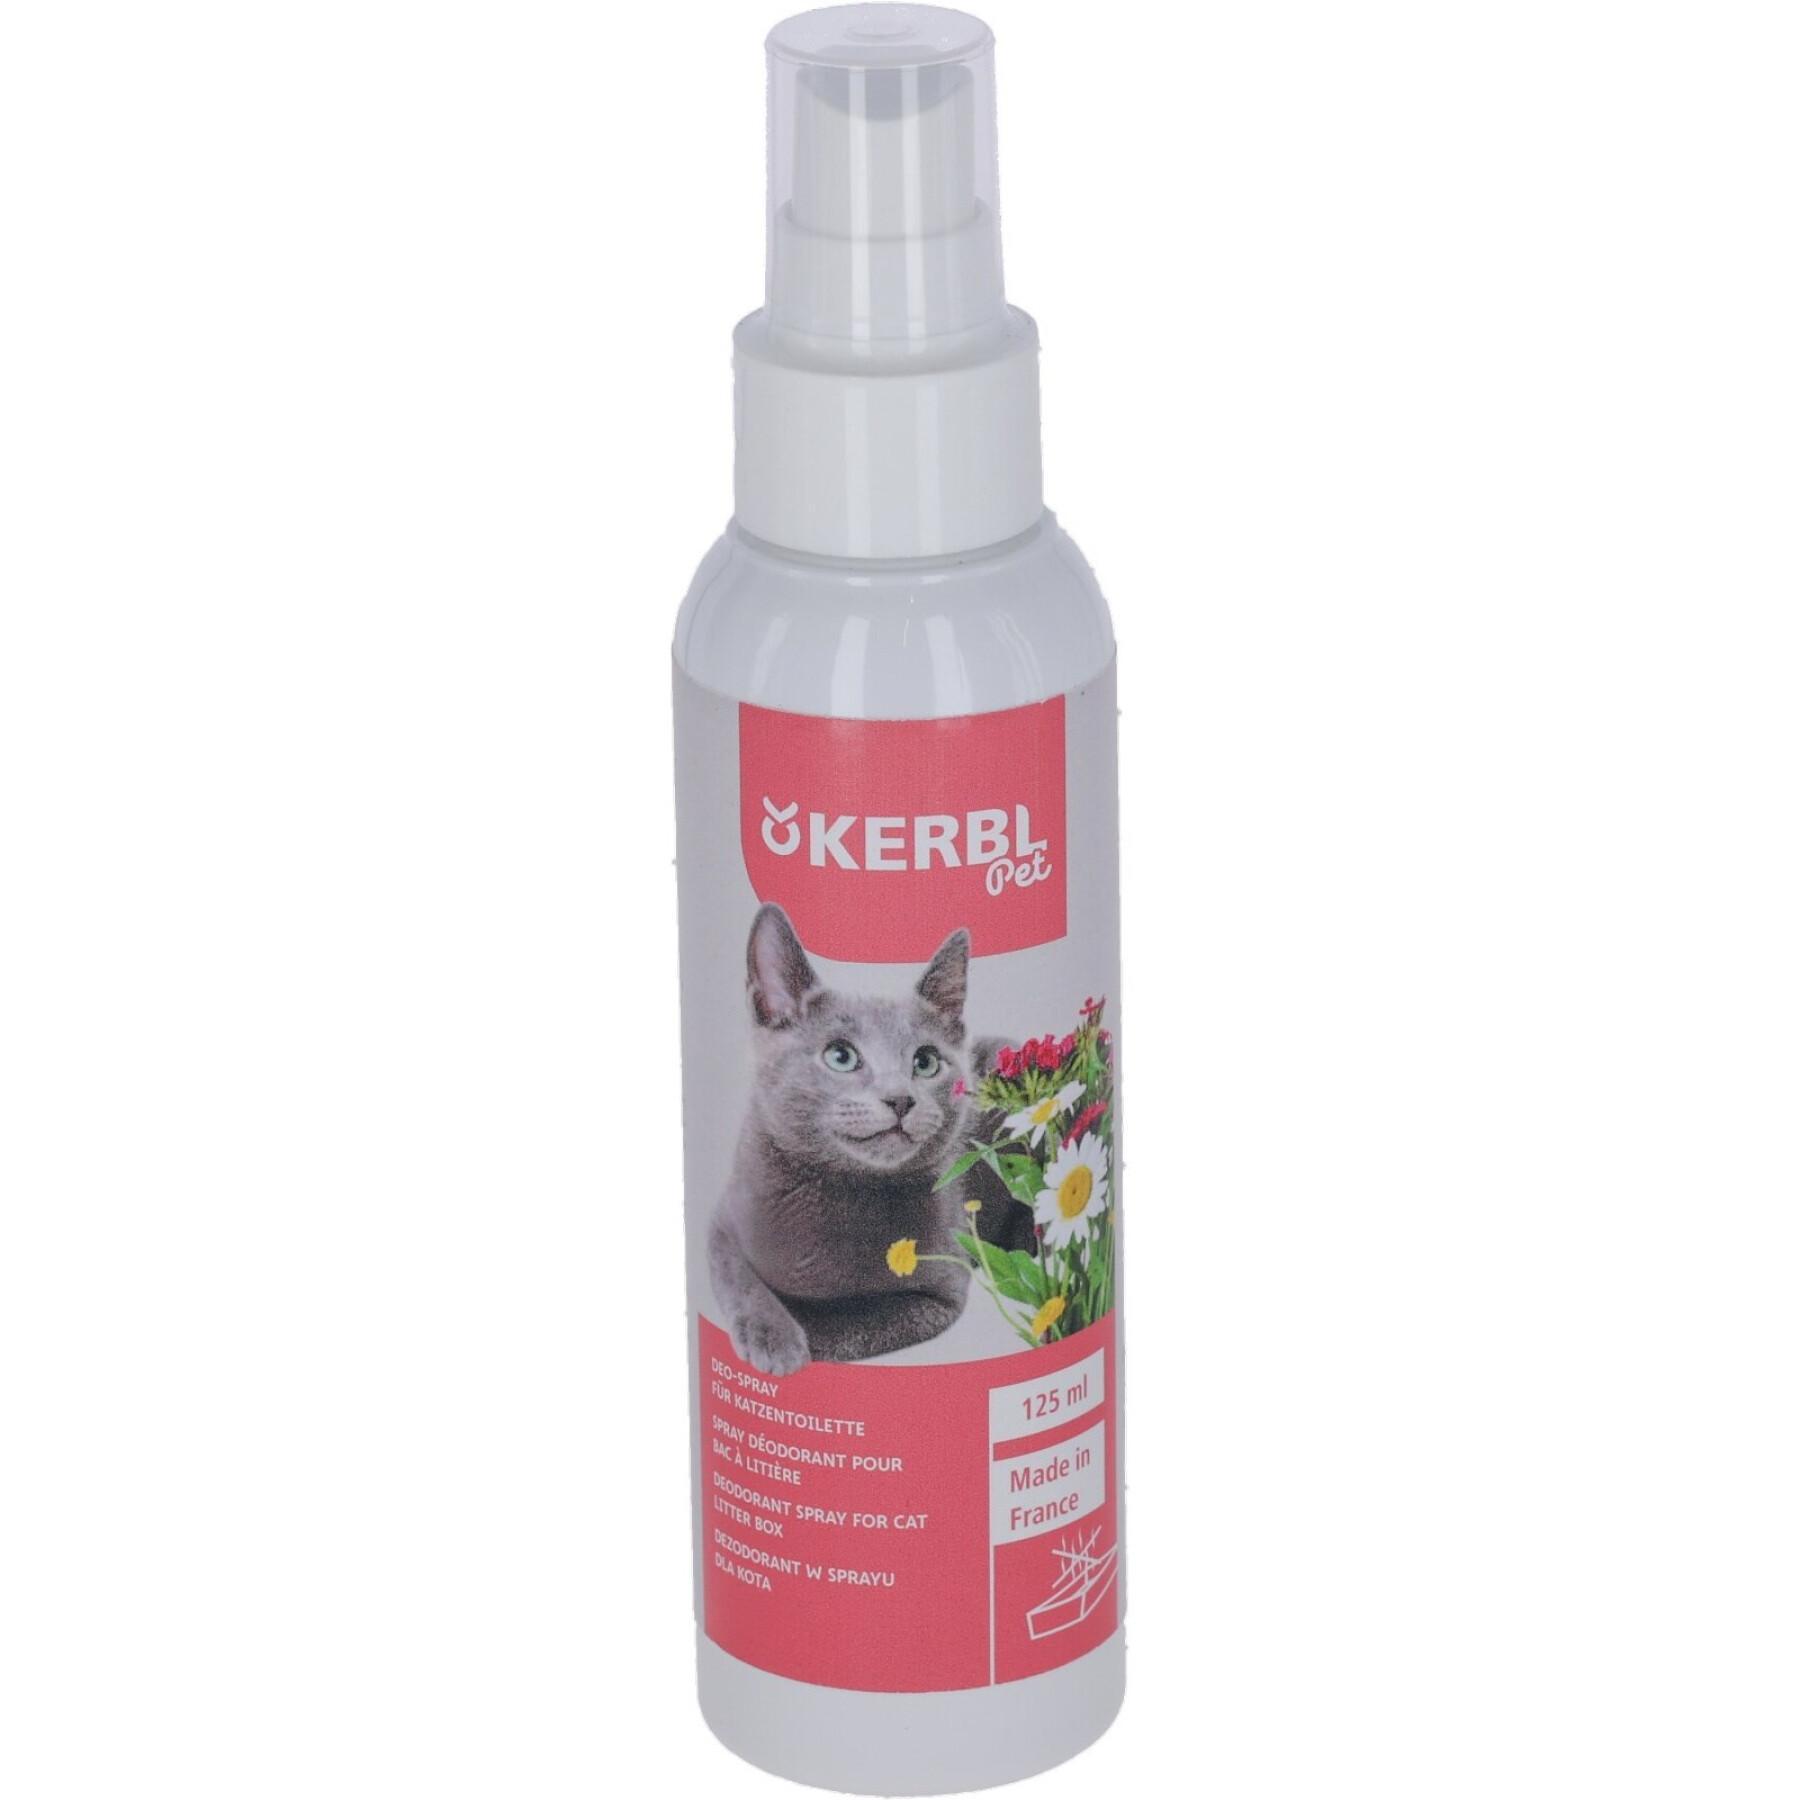 Litter box deodorizing spray Kerbl